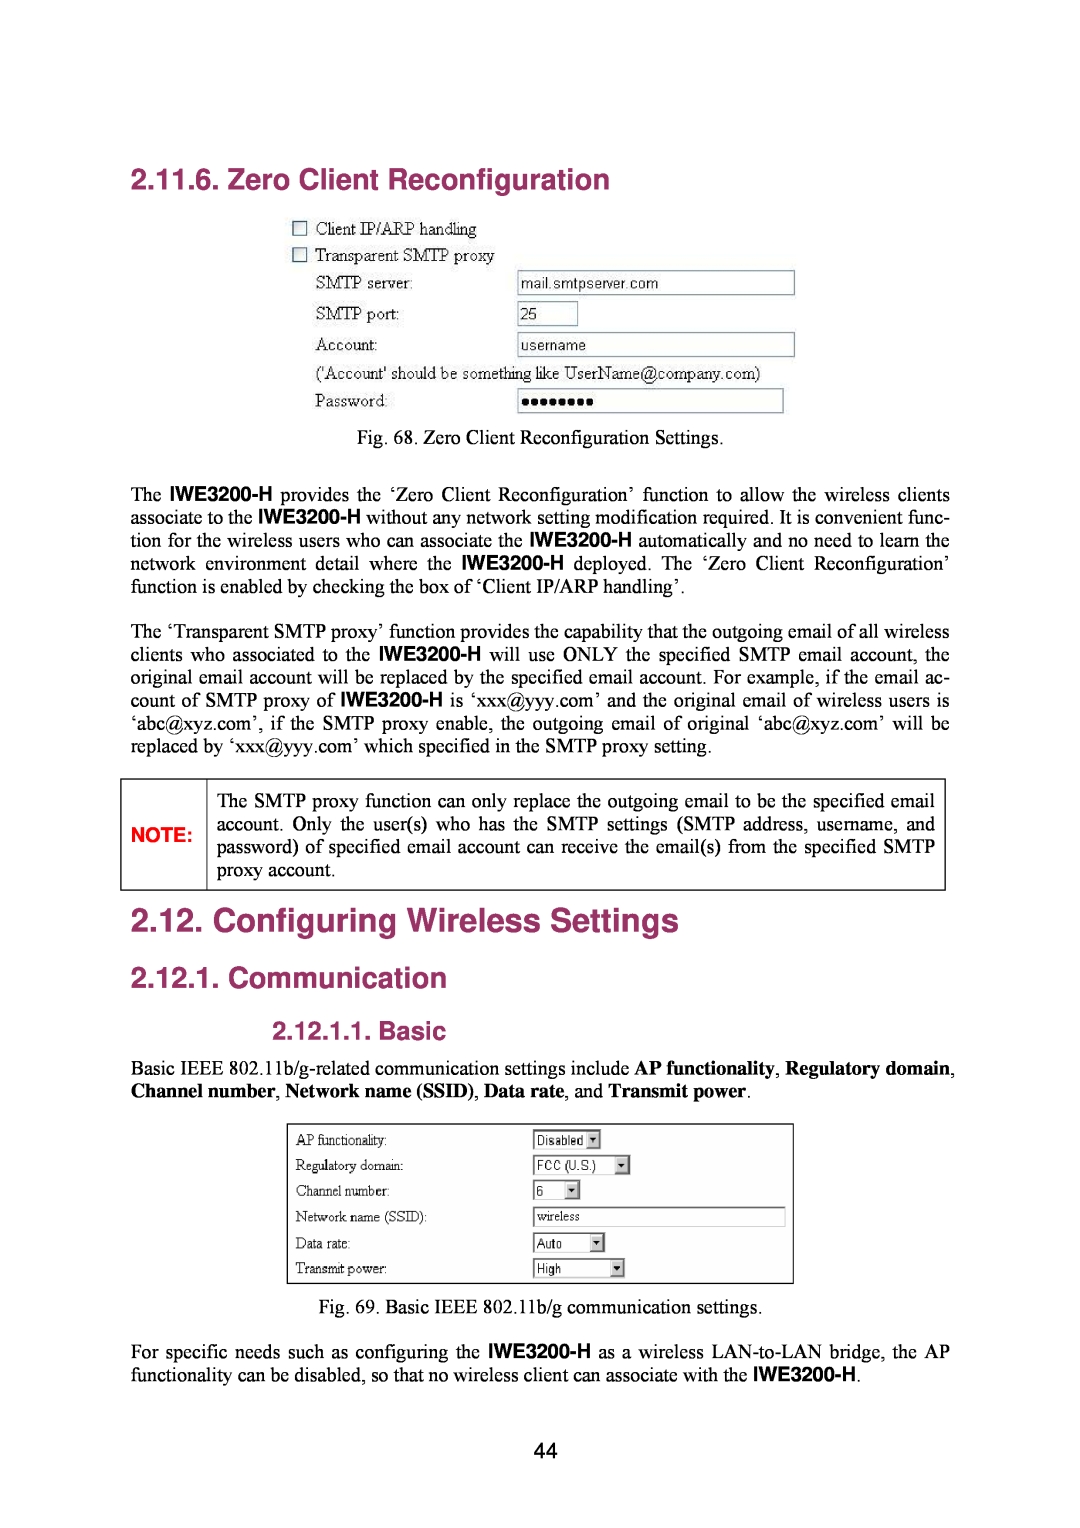 Epson IWE3200-H manual Configuring Wireless Settings, Zero Client Reconfiguration, Communication 